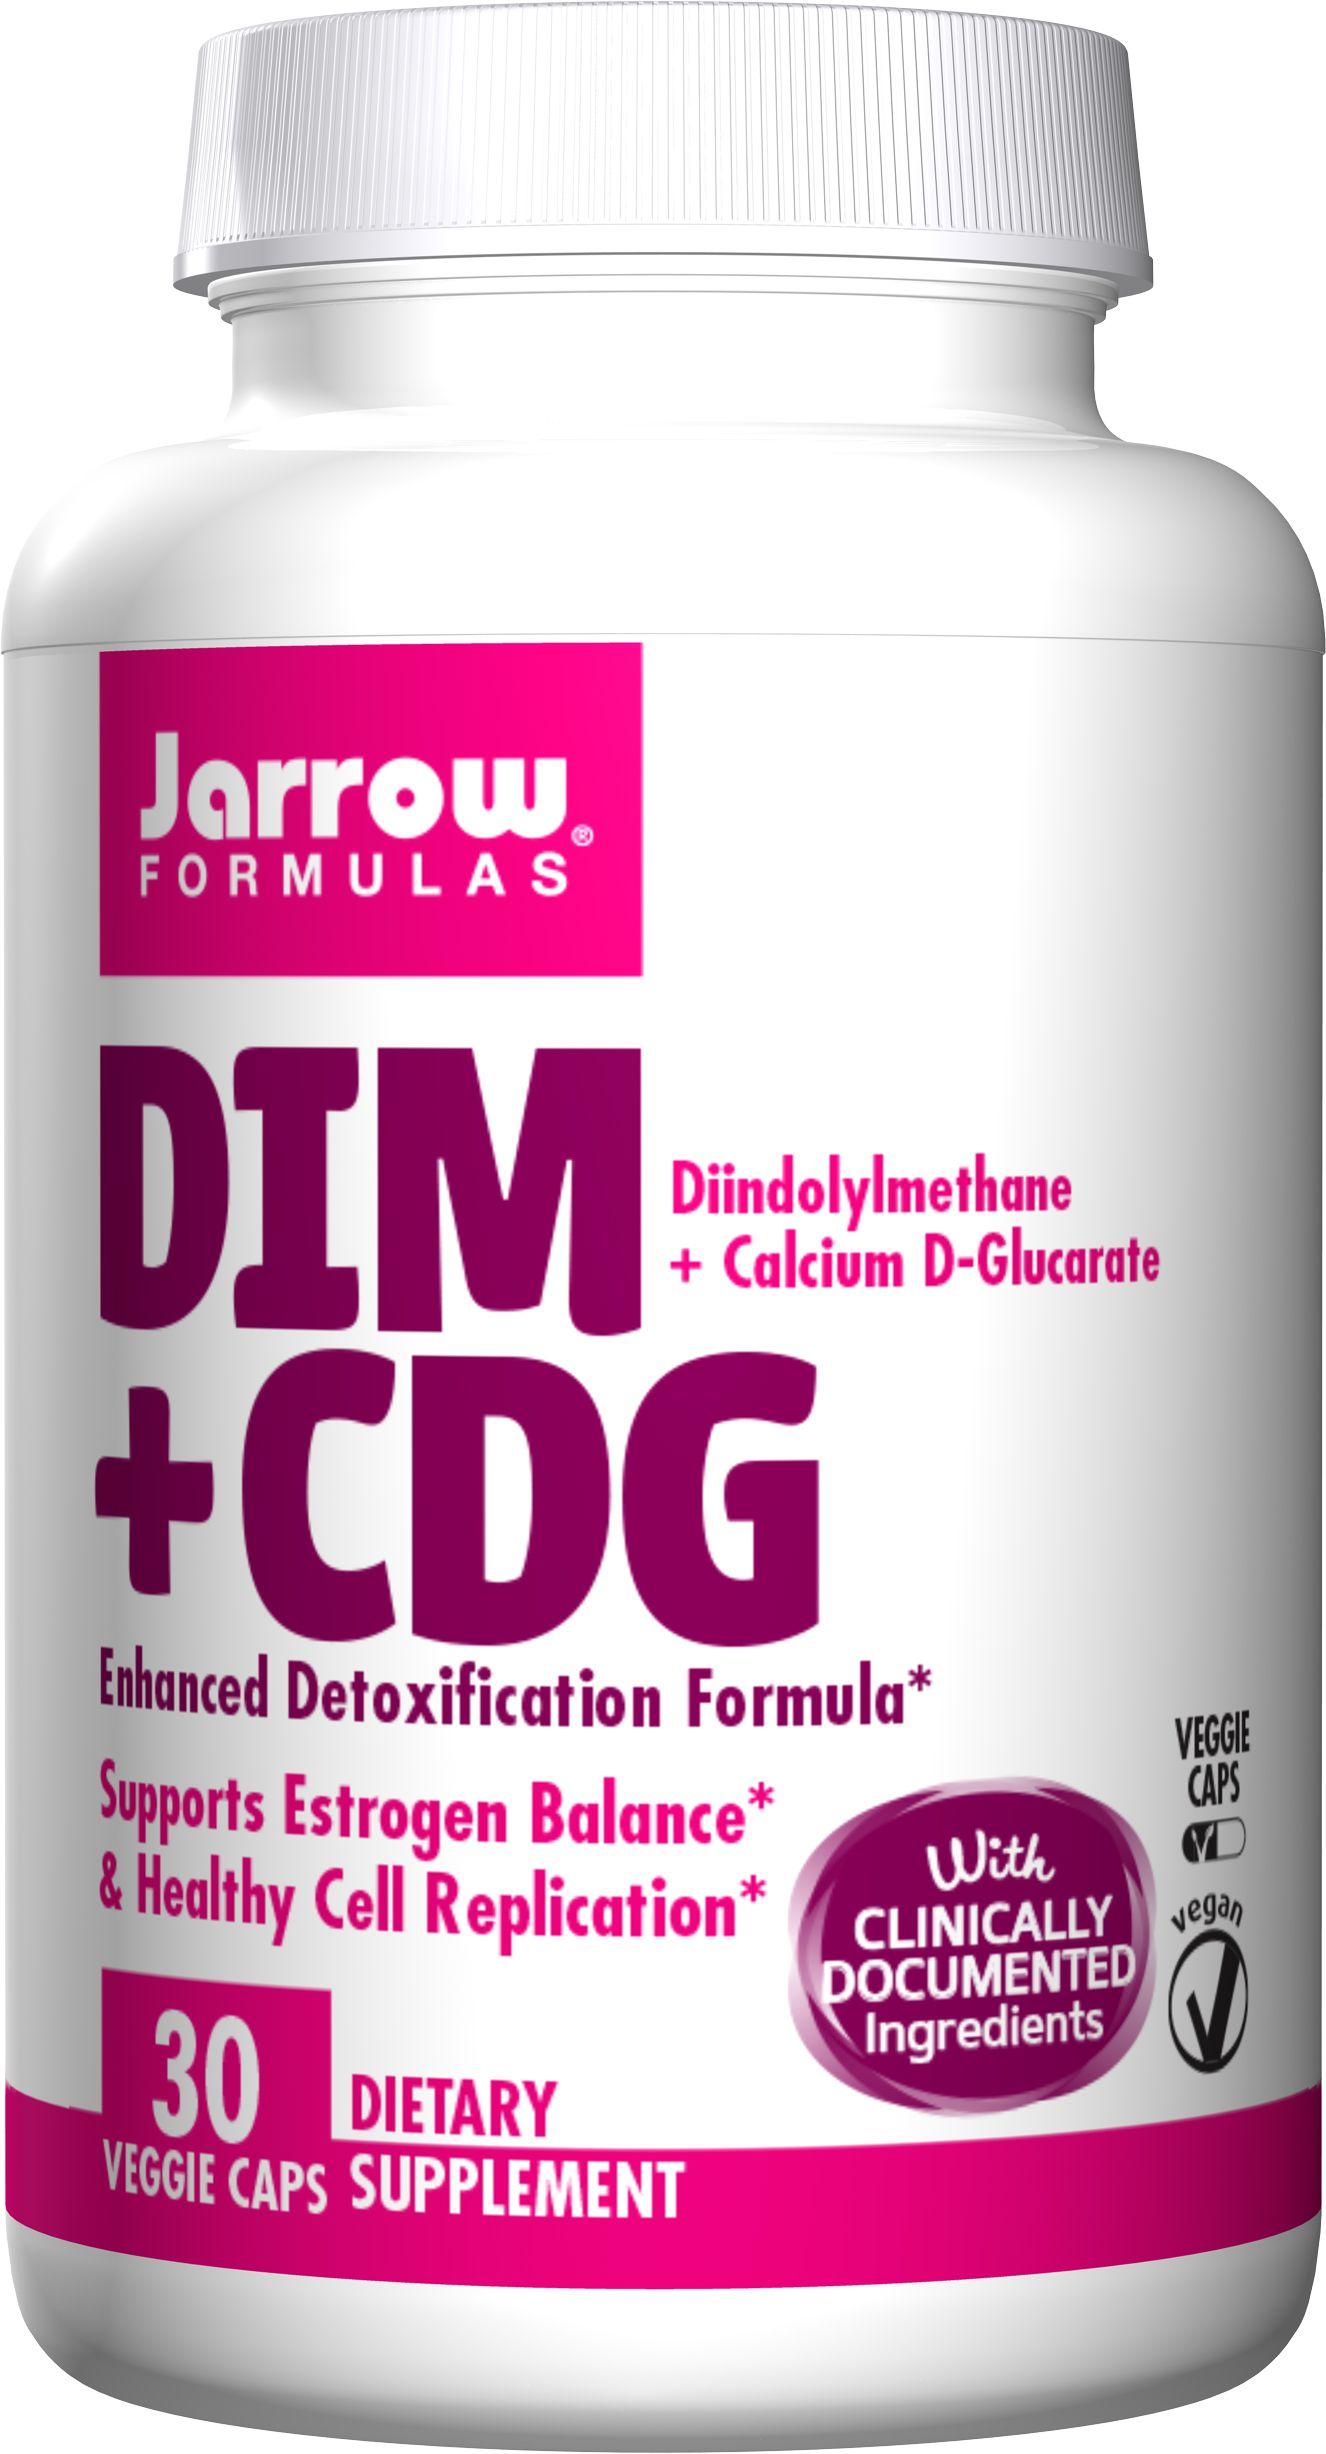 CDG Glucarate Logo - Jarrow Formulas : DIM + CDG